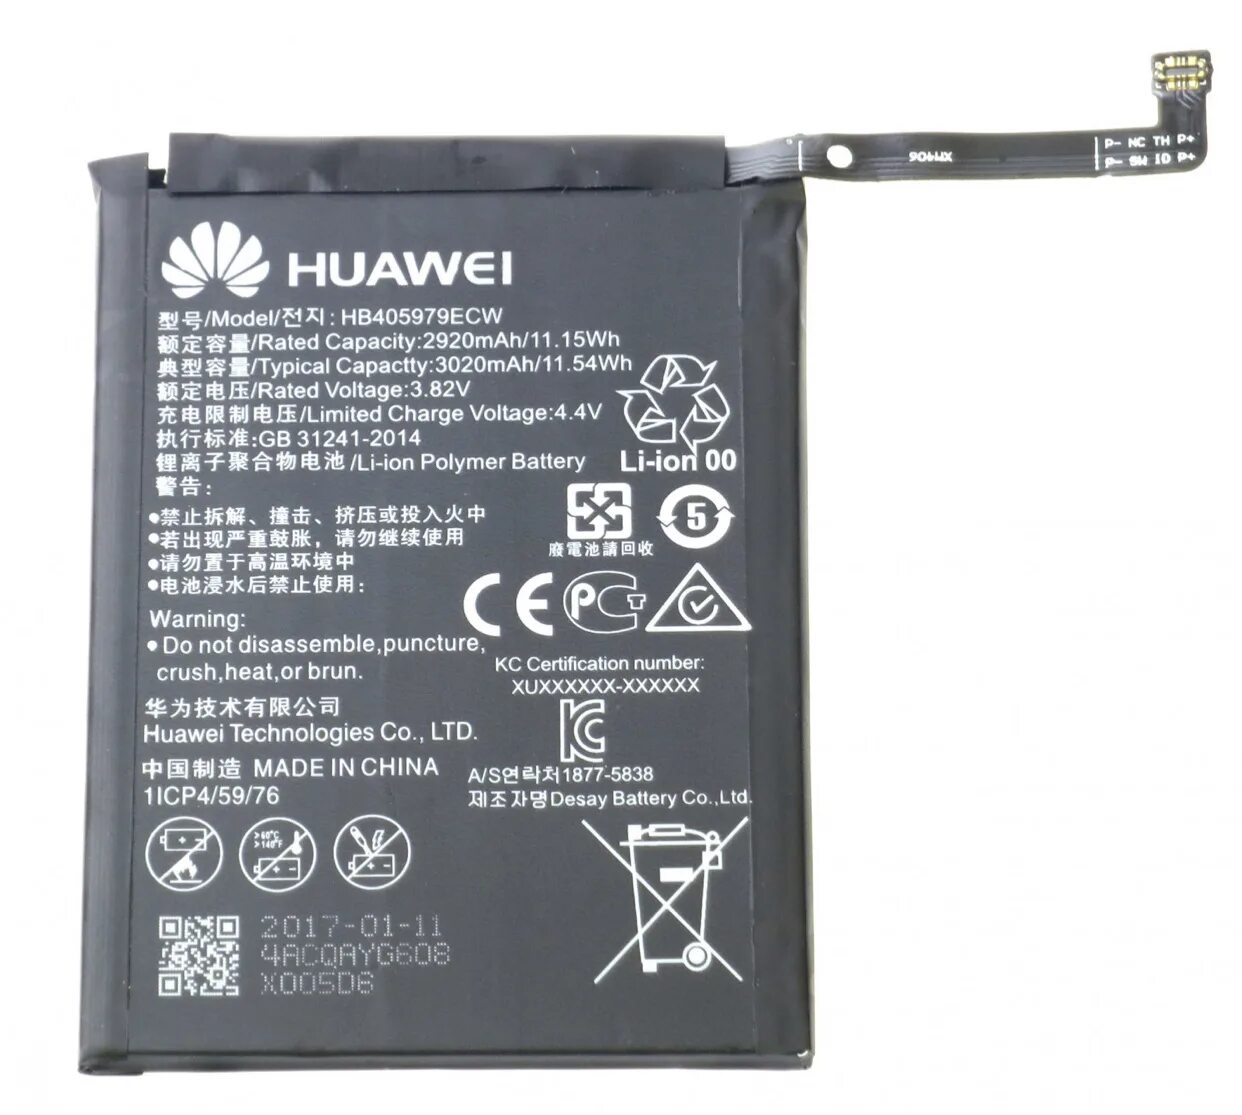 Huawei battery. Аккумулятор hb405979ecw для Huawei Nova оригинал. Huawei y6 2019 аккумулятора. Hb405979ecw аккумулятор модель телефона. Huawei hb405979ecw.